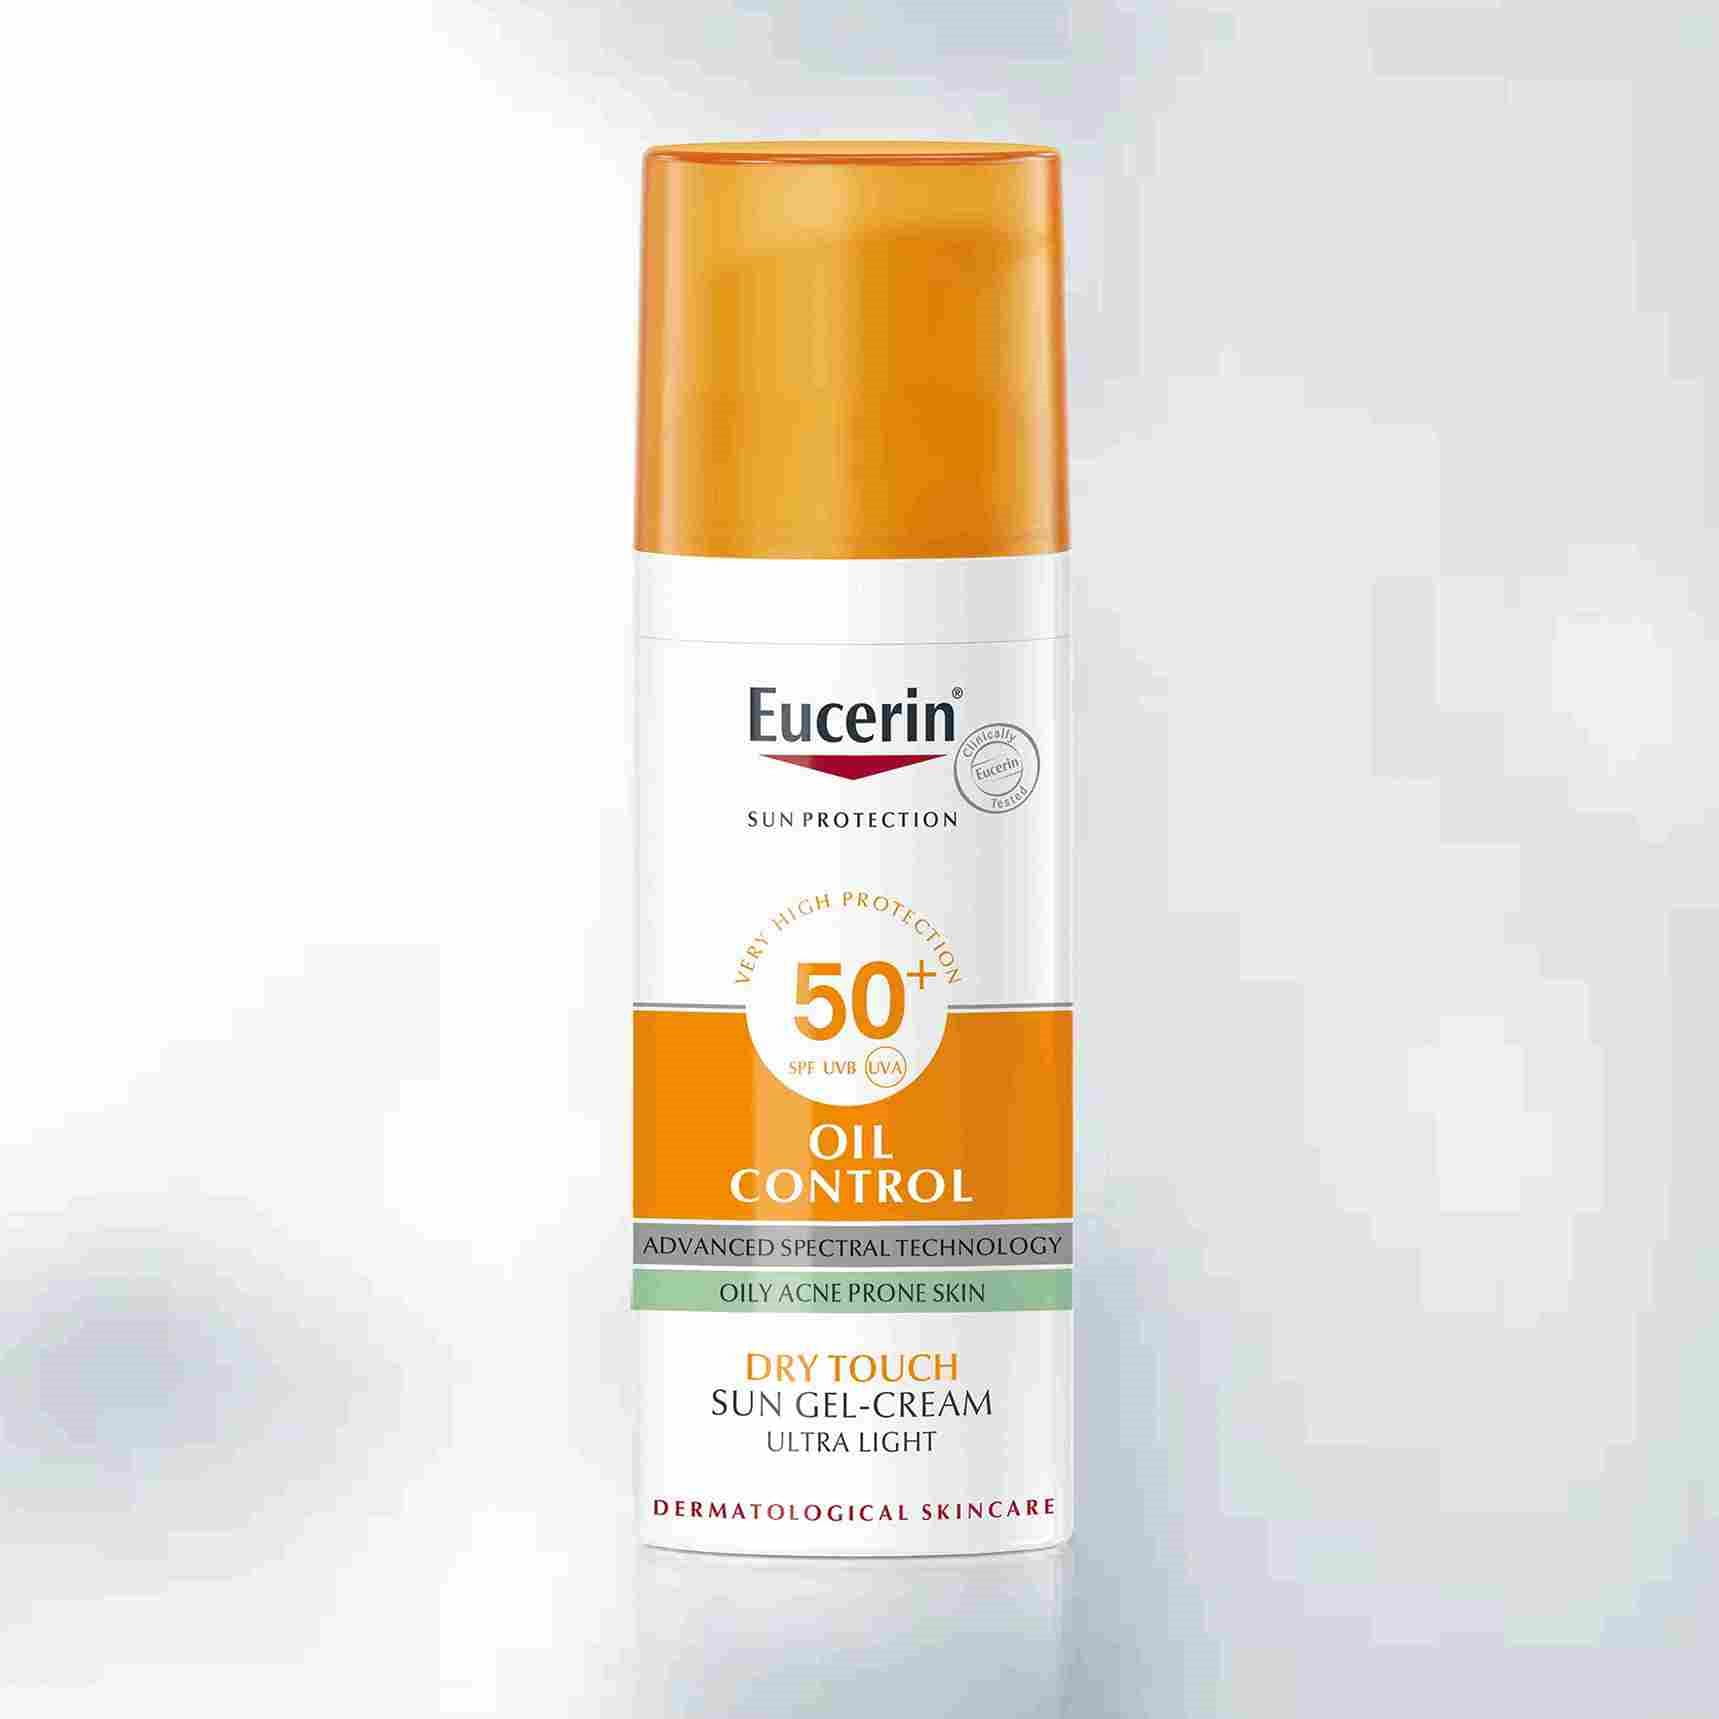 Eucerin Sun Dry Touch Oil Control SPF 50